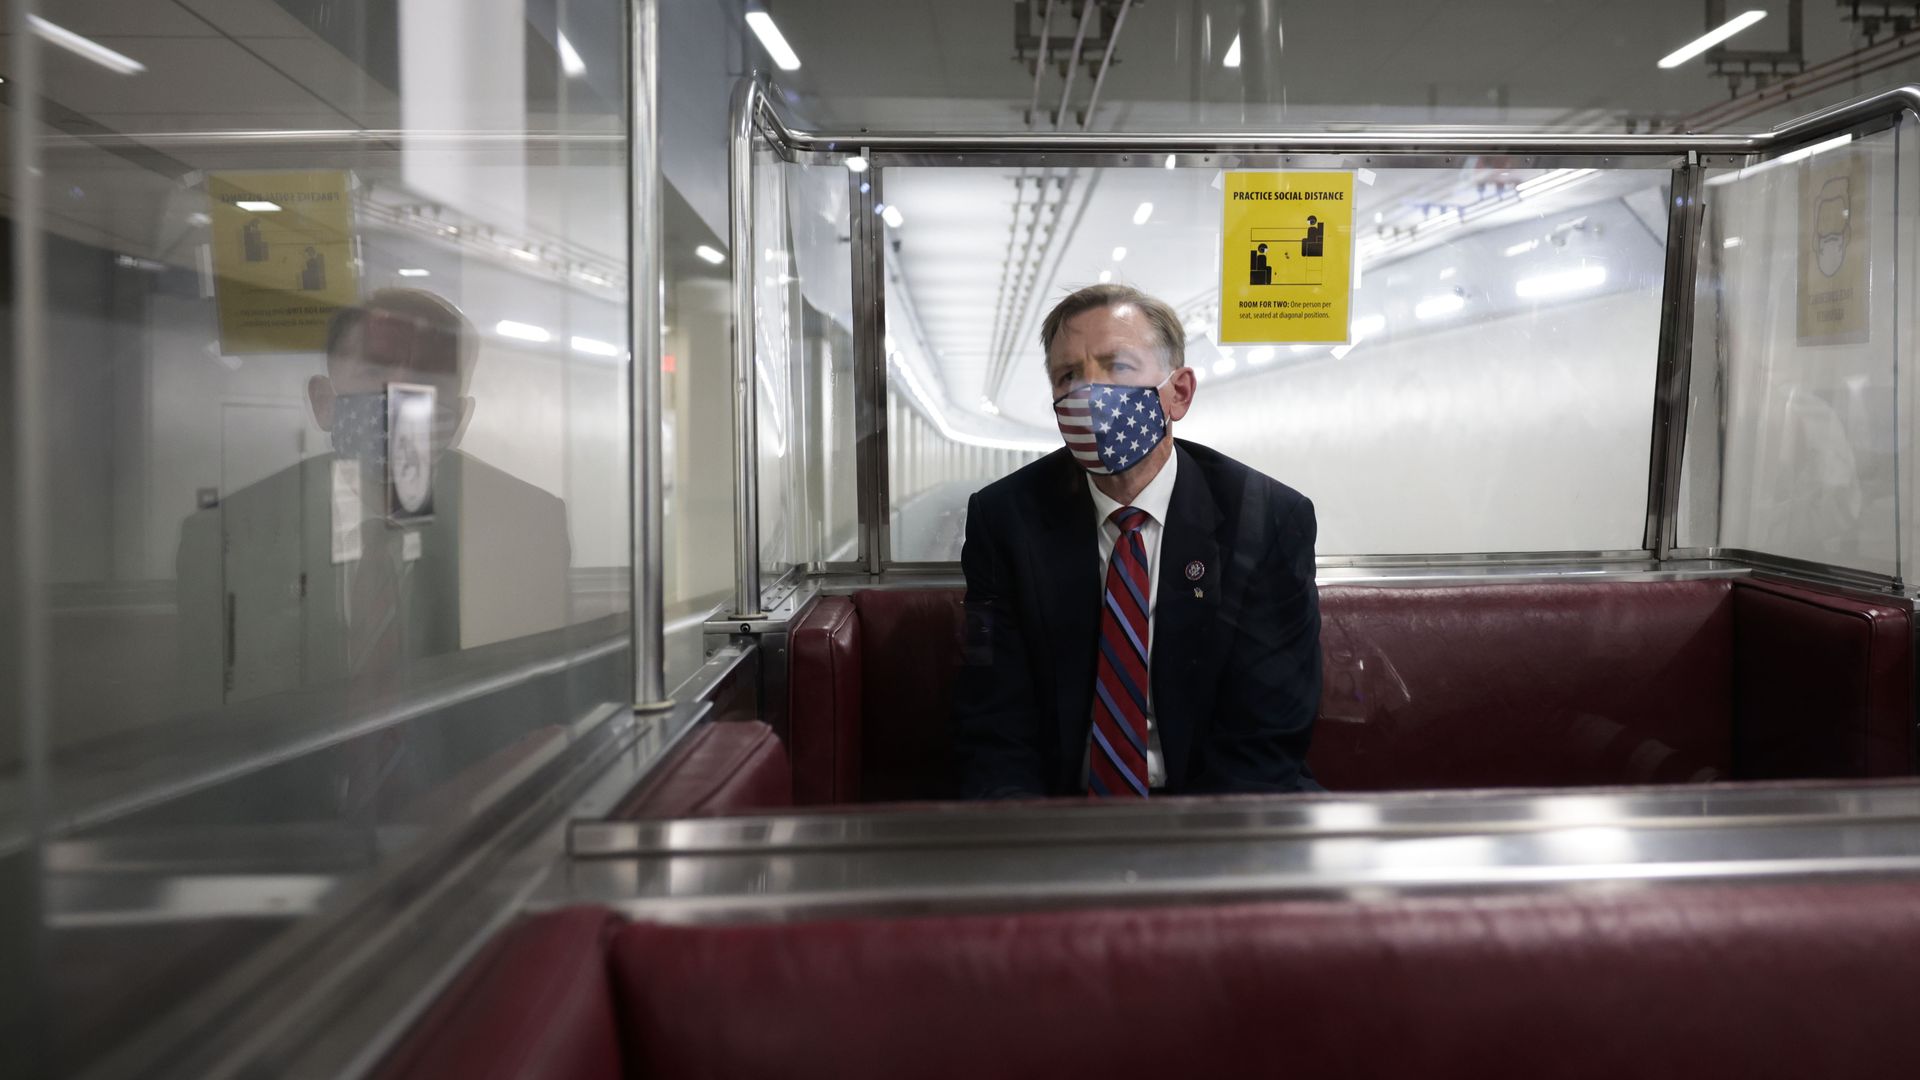 Rep. Paul Gosar as is seen sitting in a U.S. Capitol subway car.